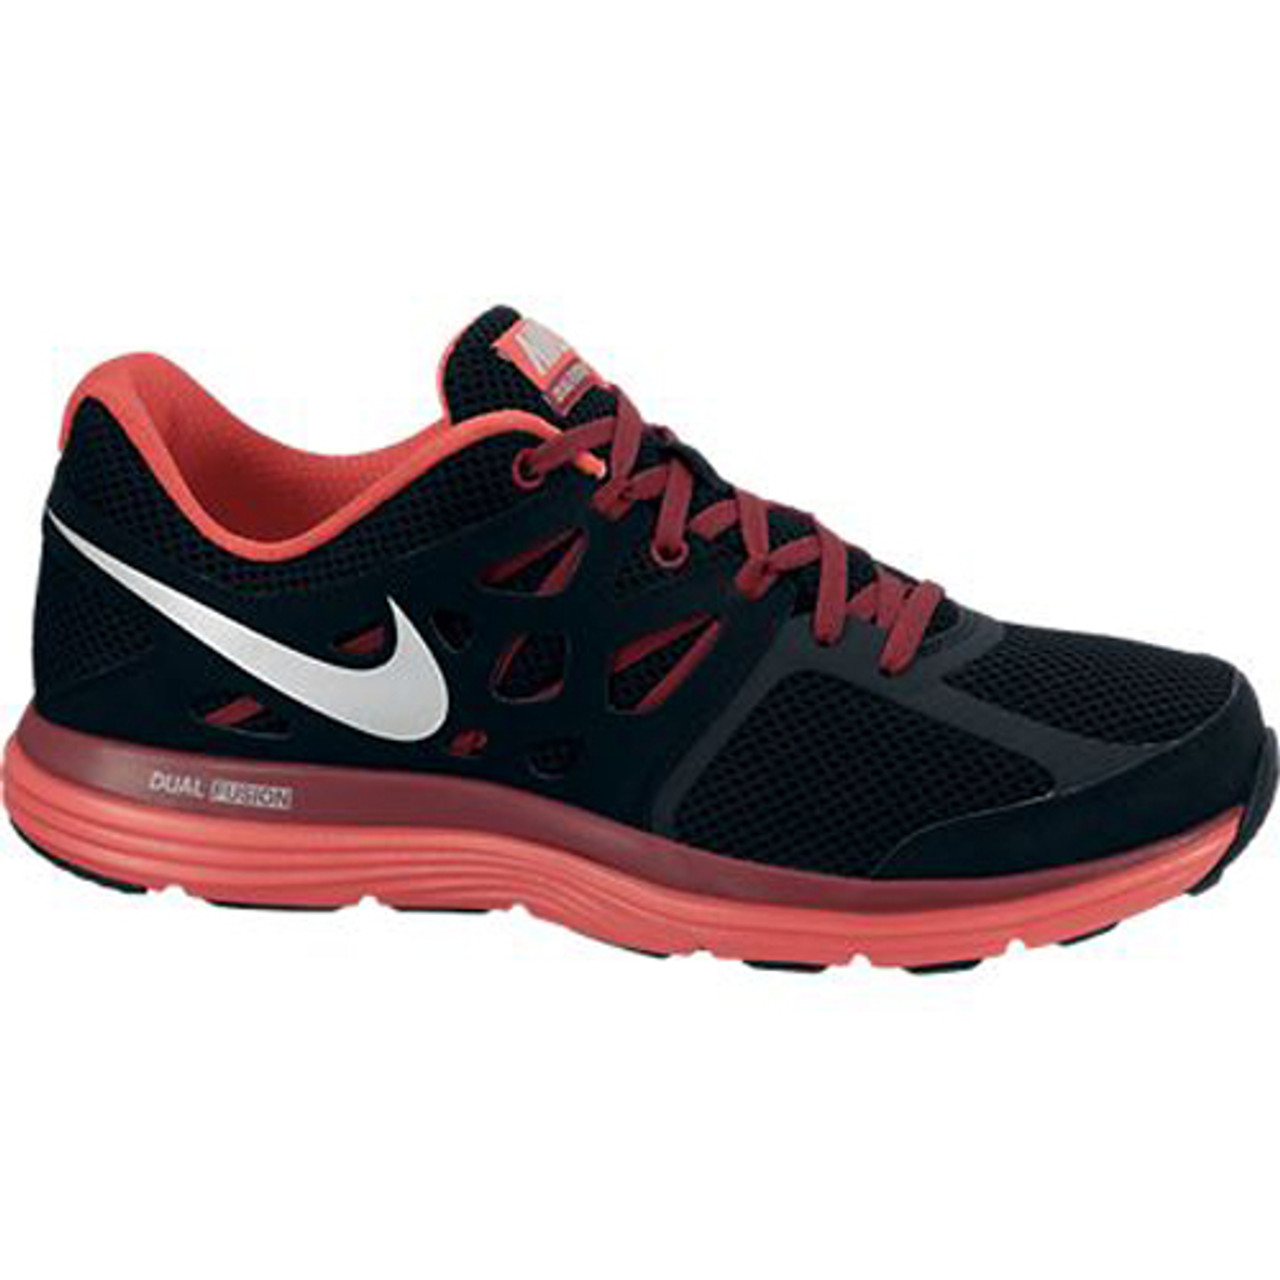 New Nike Dual Fusion Lite Black/Red Mens Running - Black/Team Red/Challenge Red/Silver | Discount Nike Men's Athletic & - Shoolu.com | Shoolu.com